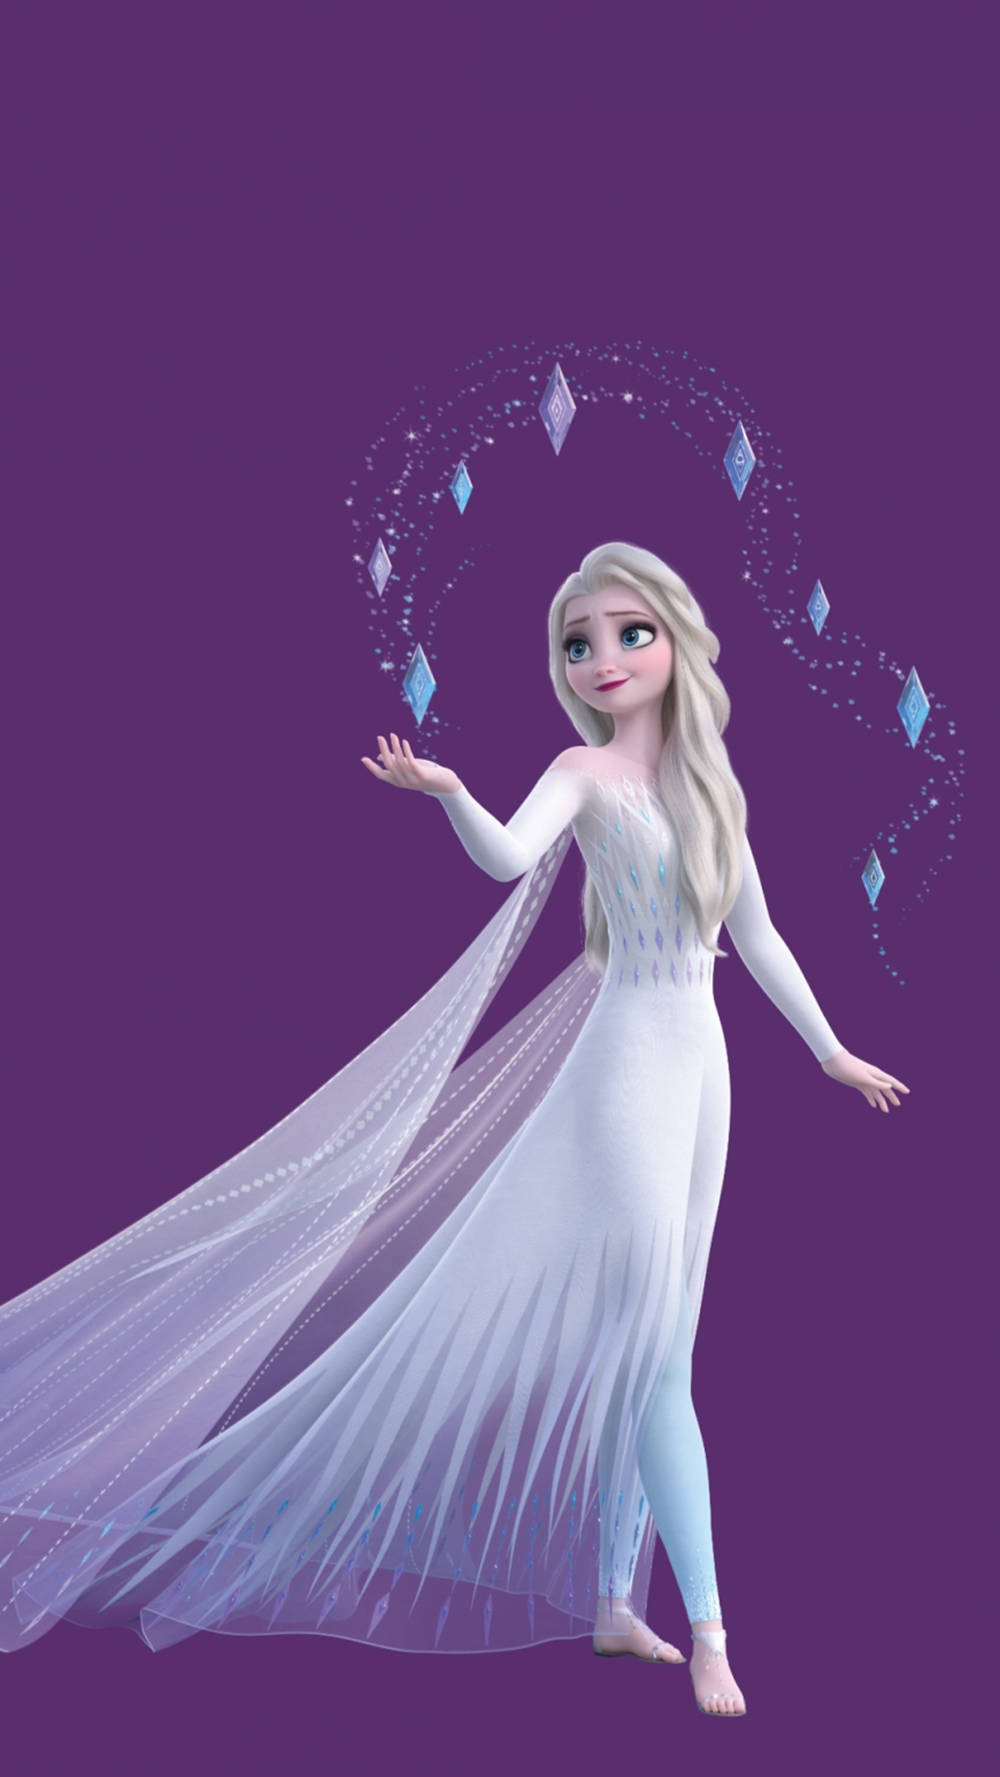 Fantastiskaelsa Frozen 2. Wallpaper